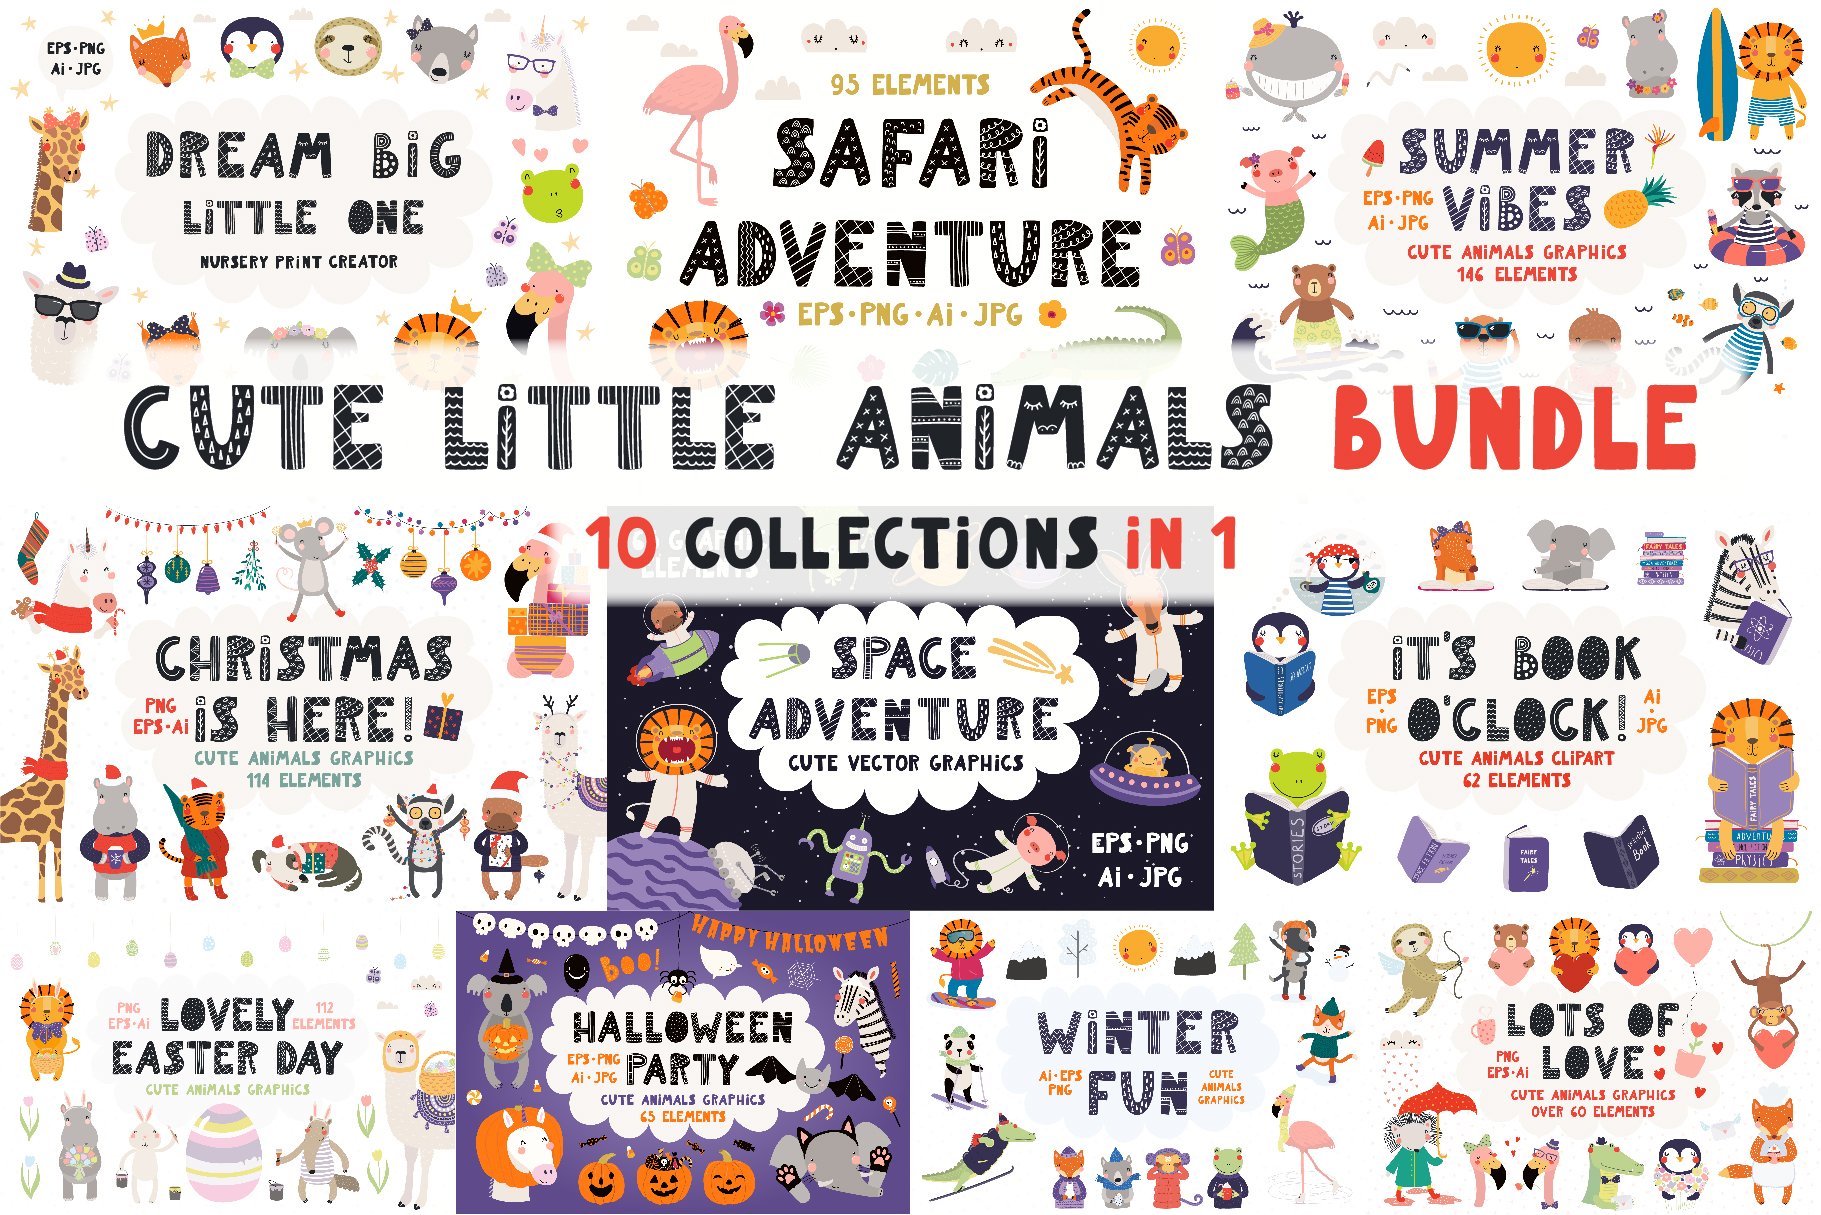 Cute Little Animals Bundle cover image.